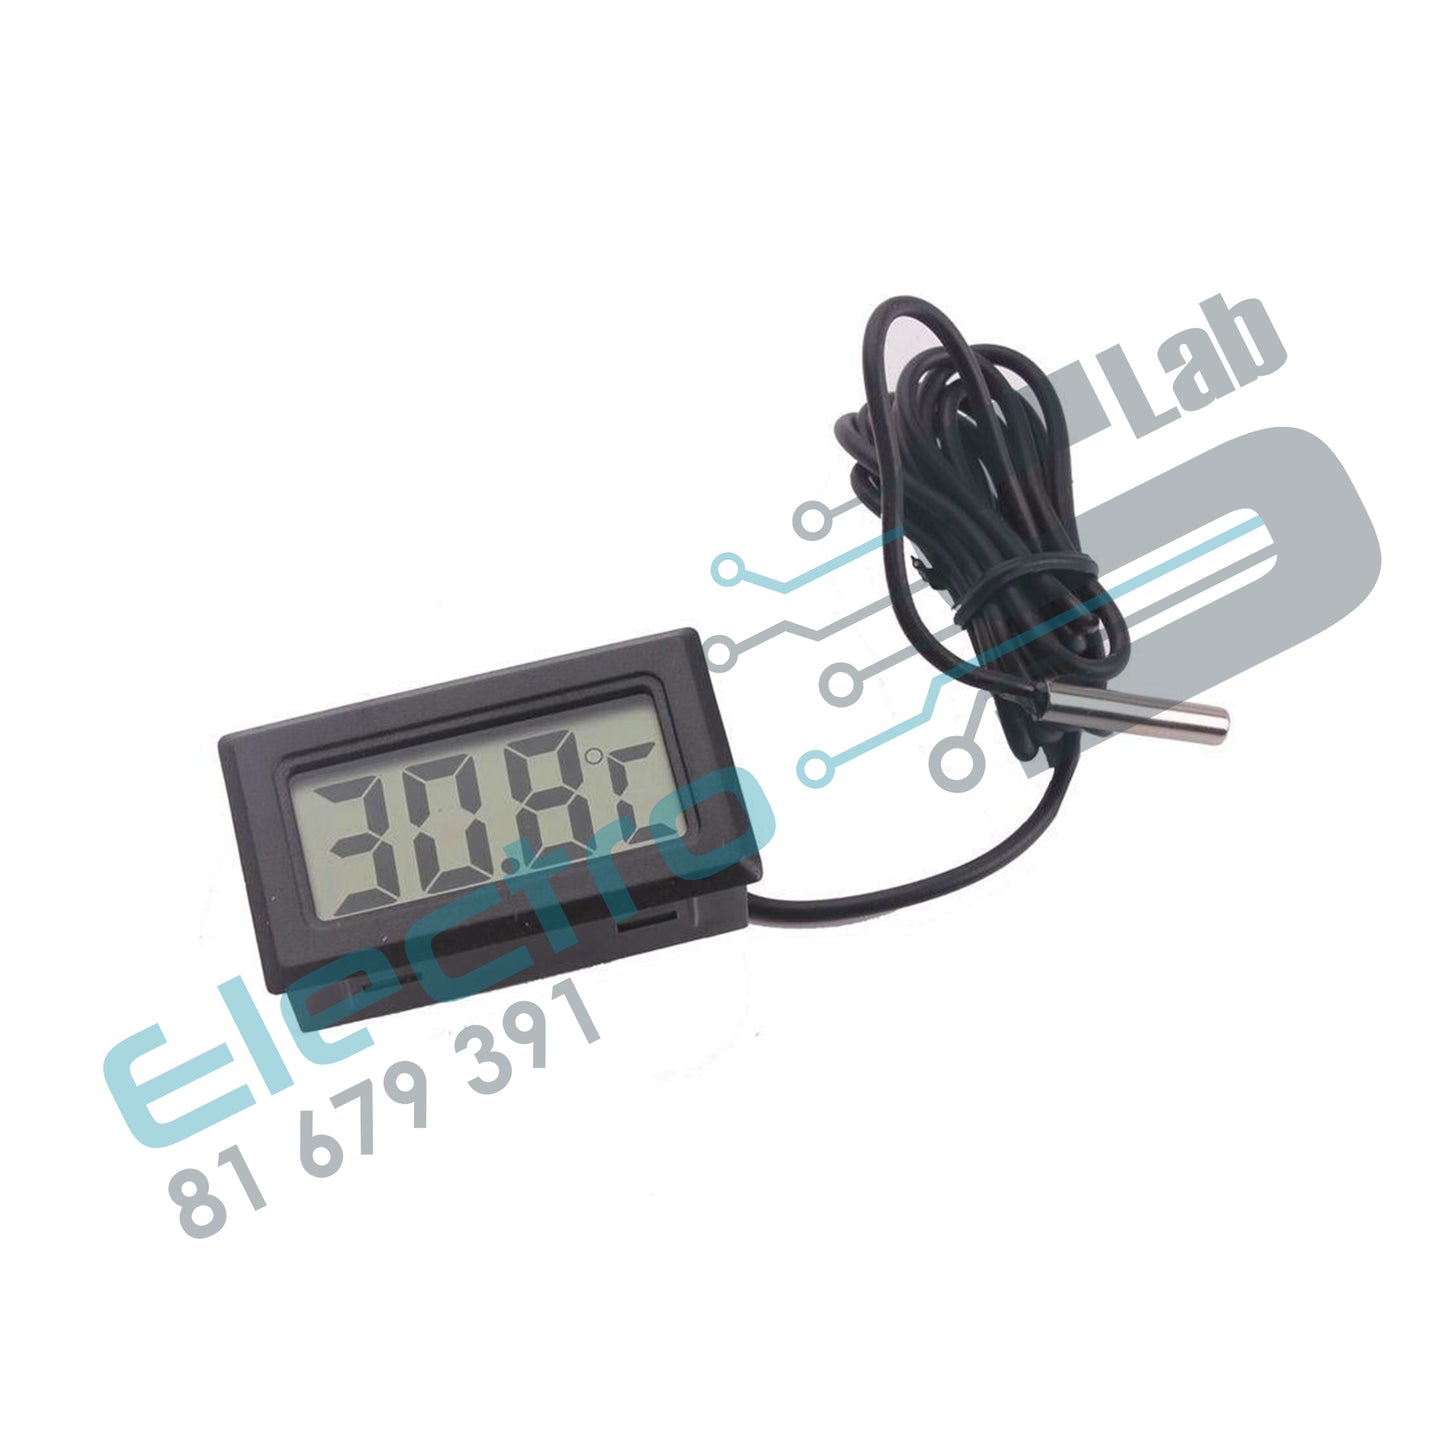 Liquid Crystal Display  Digital Thermometer